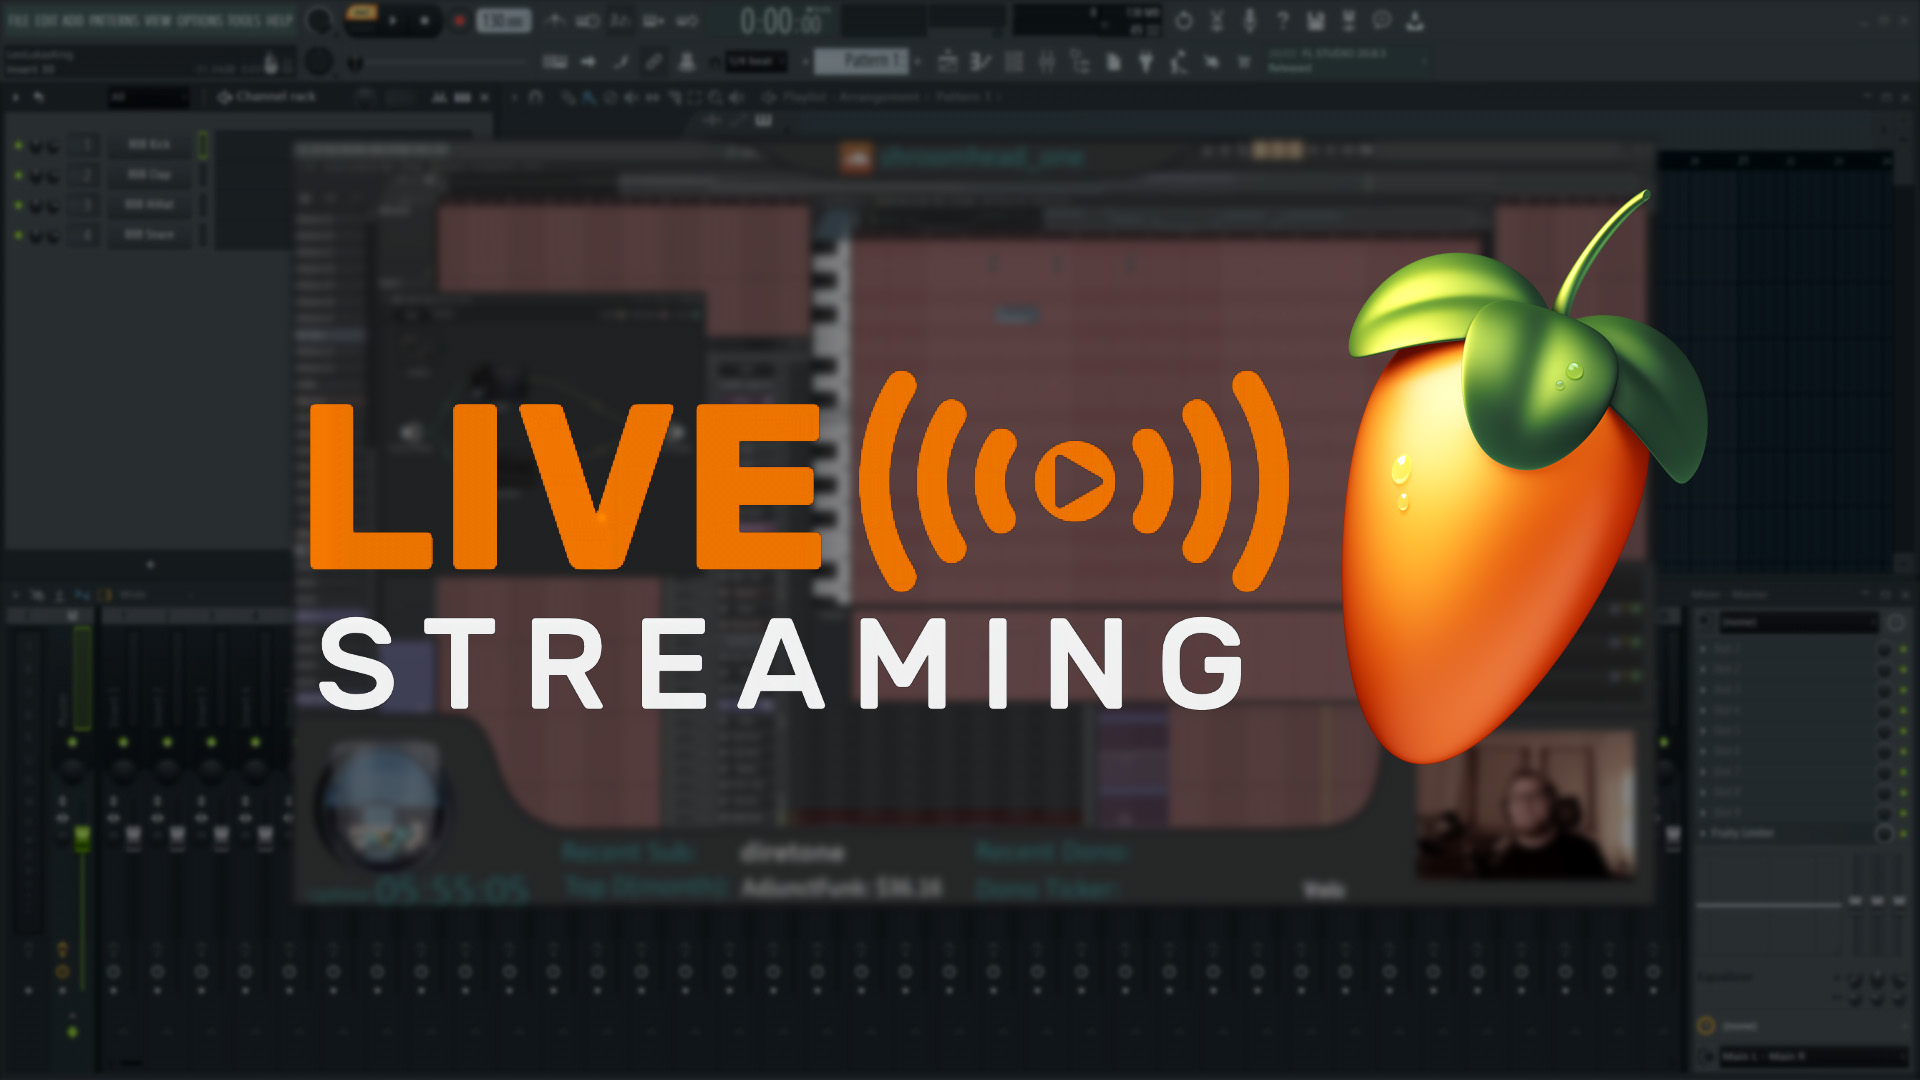 FL STUDIO Audio for Live Streams - FL Studio